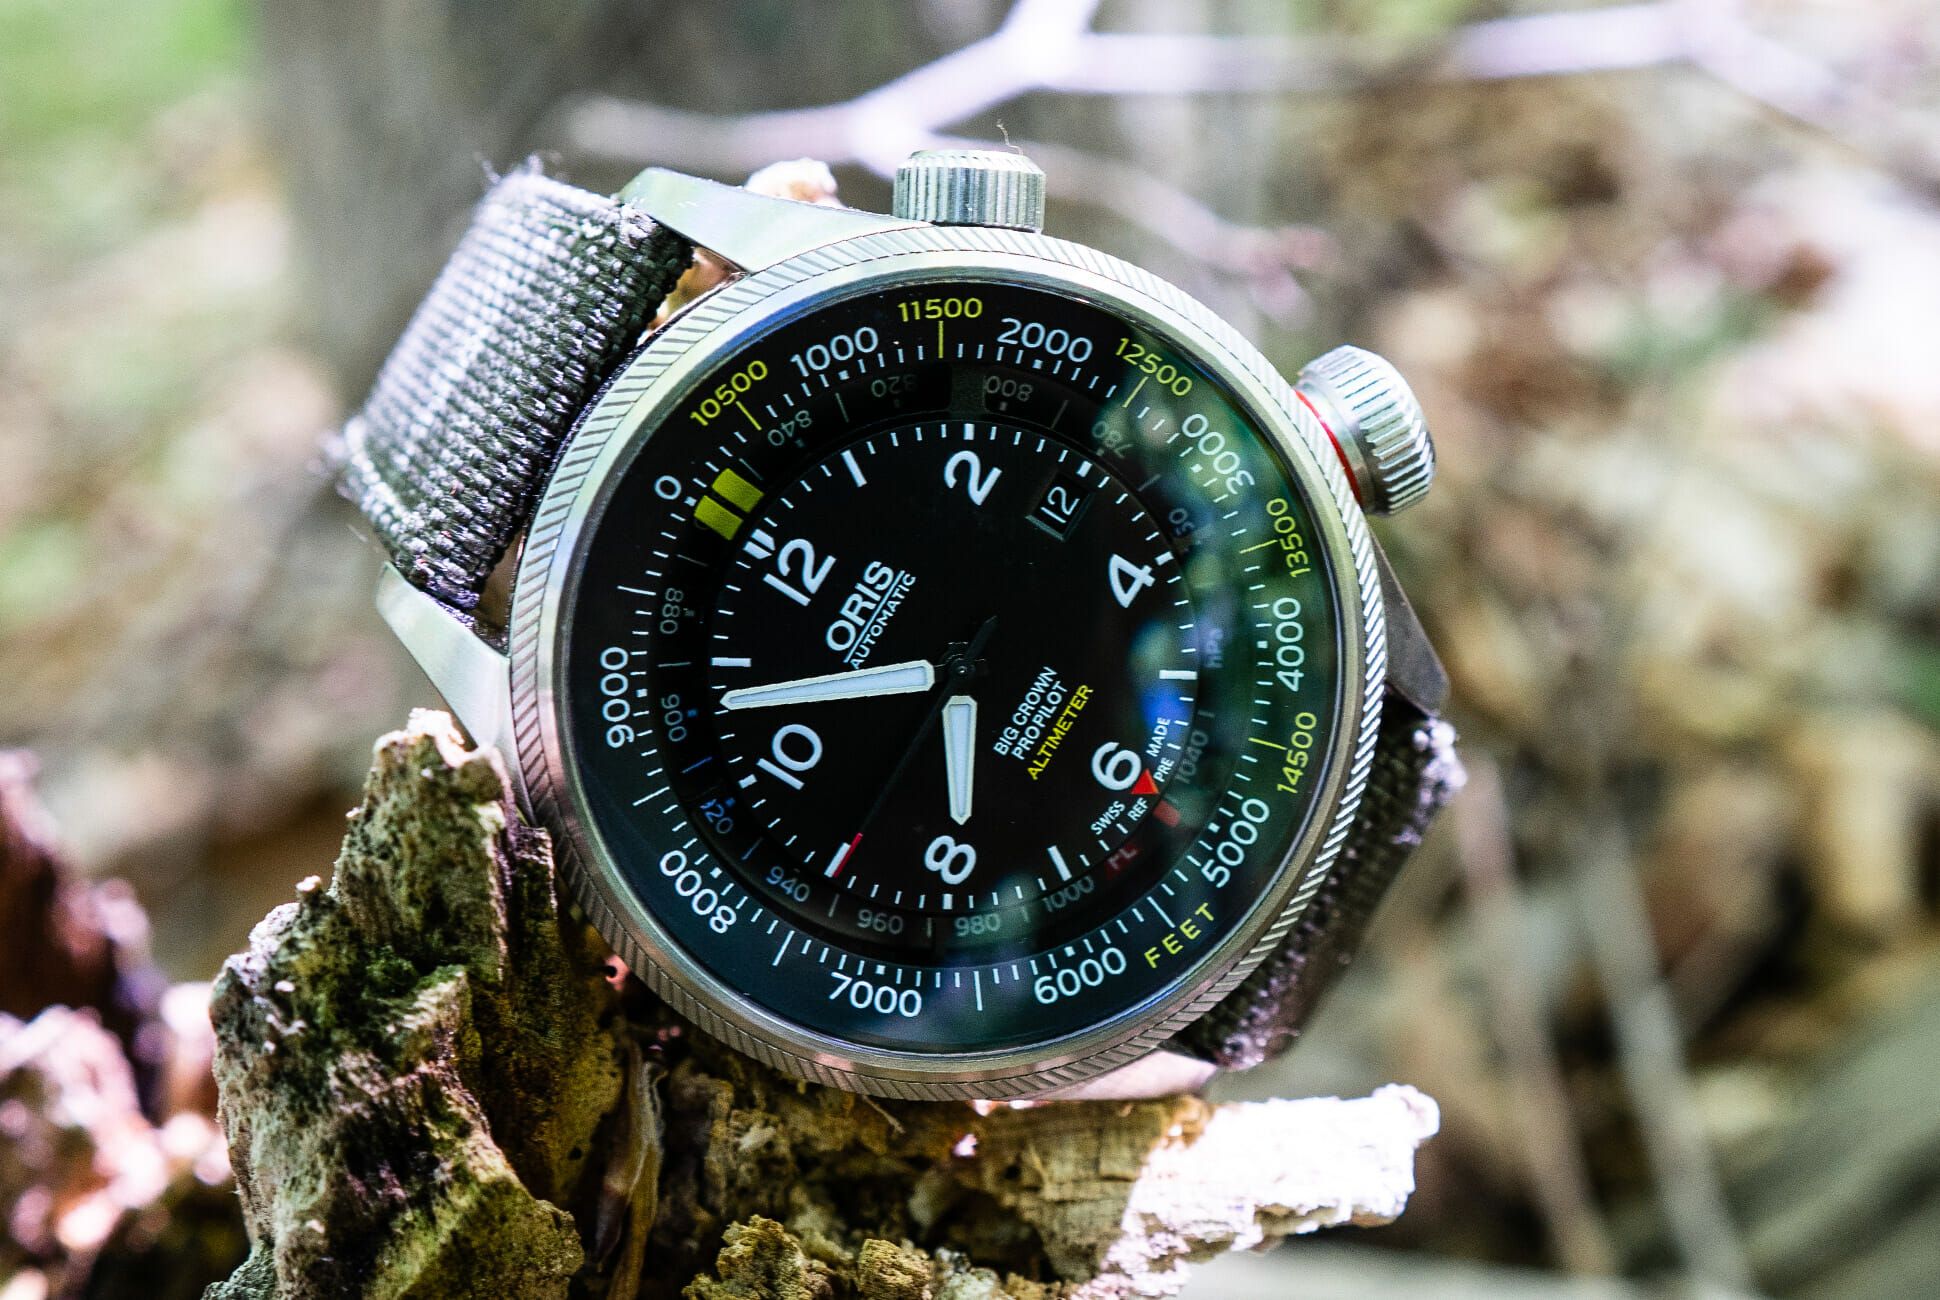 Mechanical Watch Features an Analog Altimeter